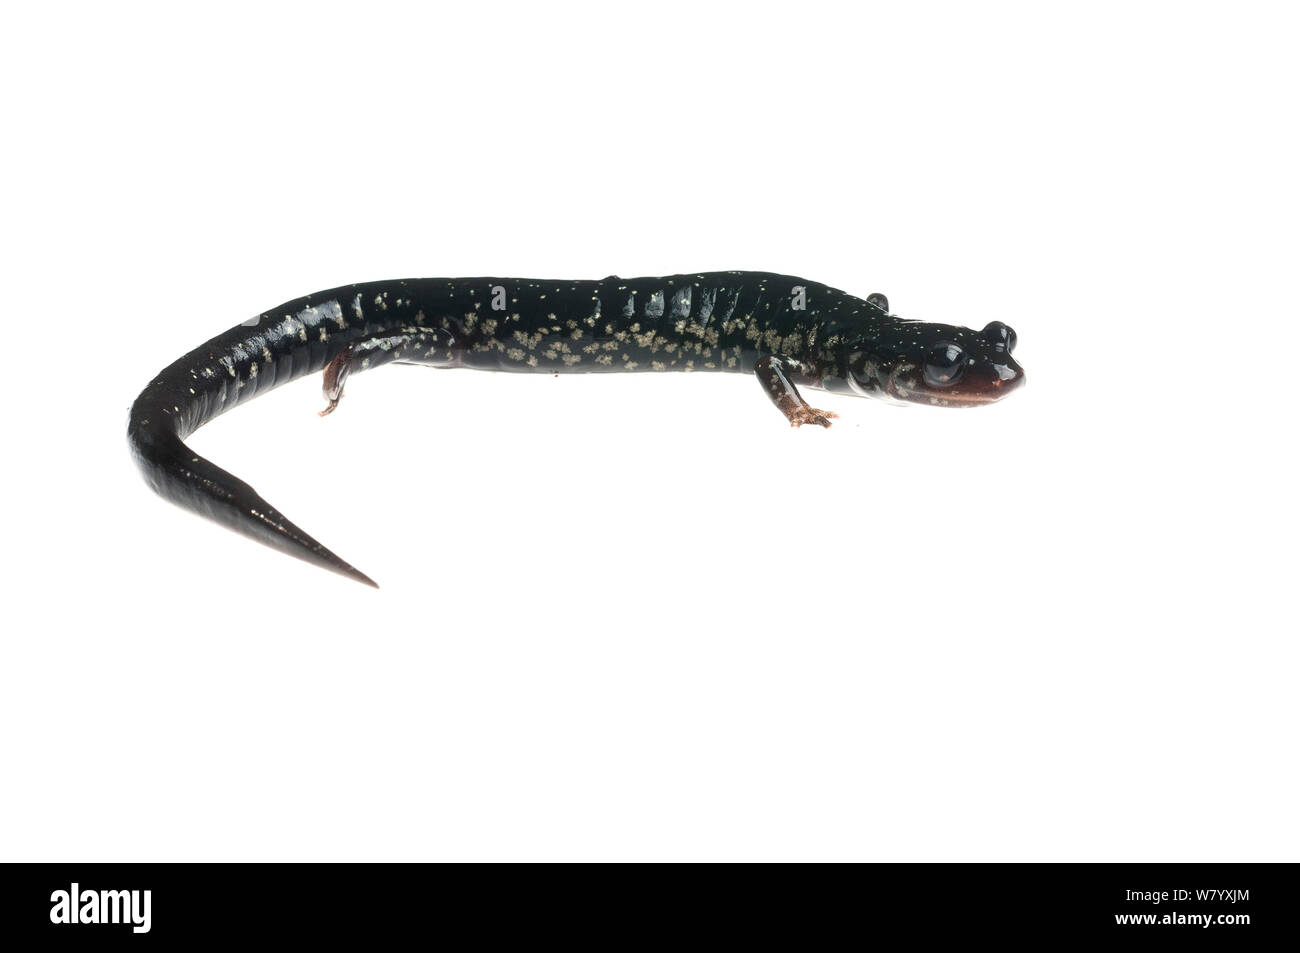 Mississippi slimy salamander (Plethodon mississippi) Tishomingo State Park, Mississippi, USA, April. Meetyourneighbours.net project Stock Photo